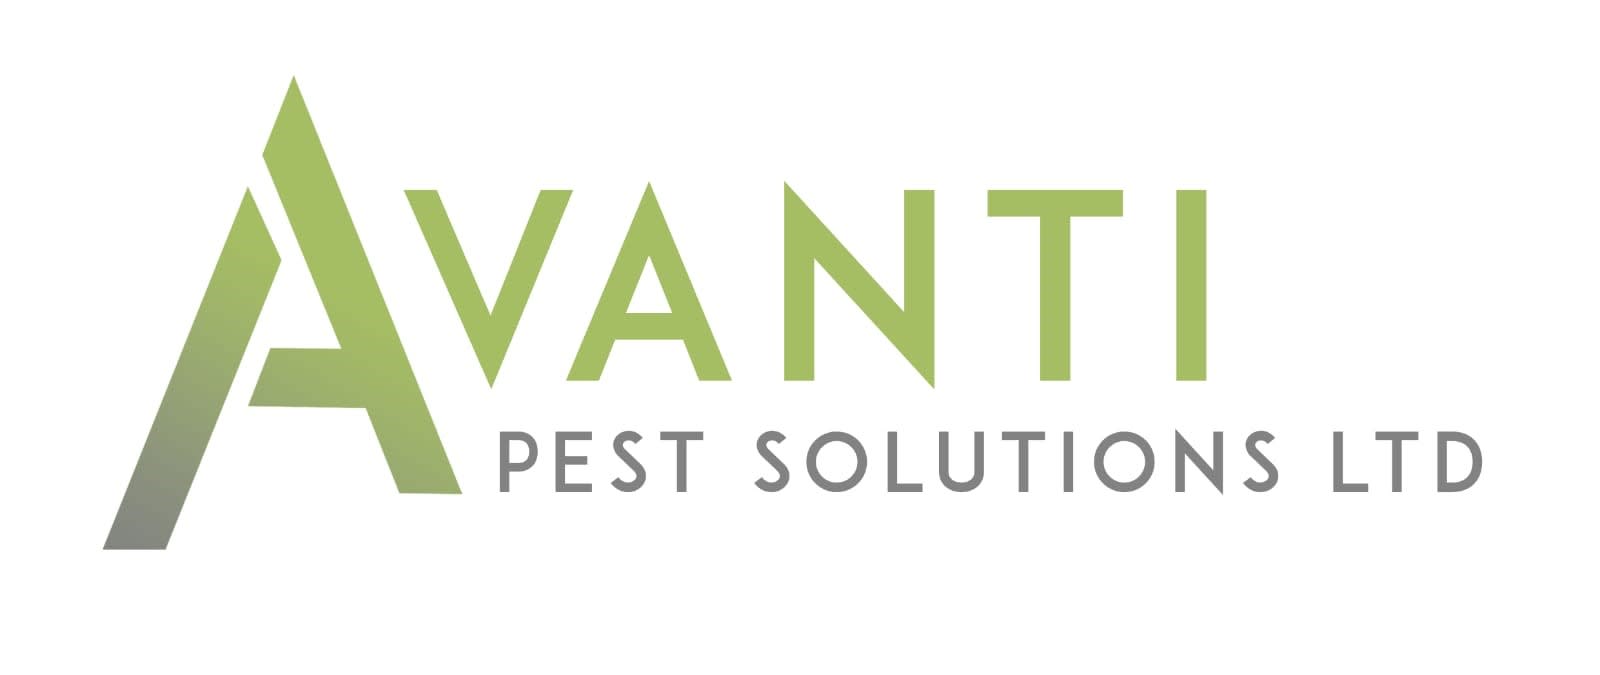 Avanti Pest Solutions Ltd Burnley 01282 270217